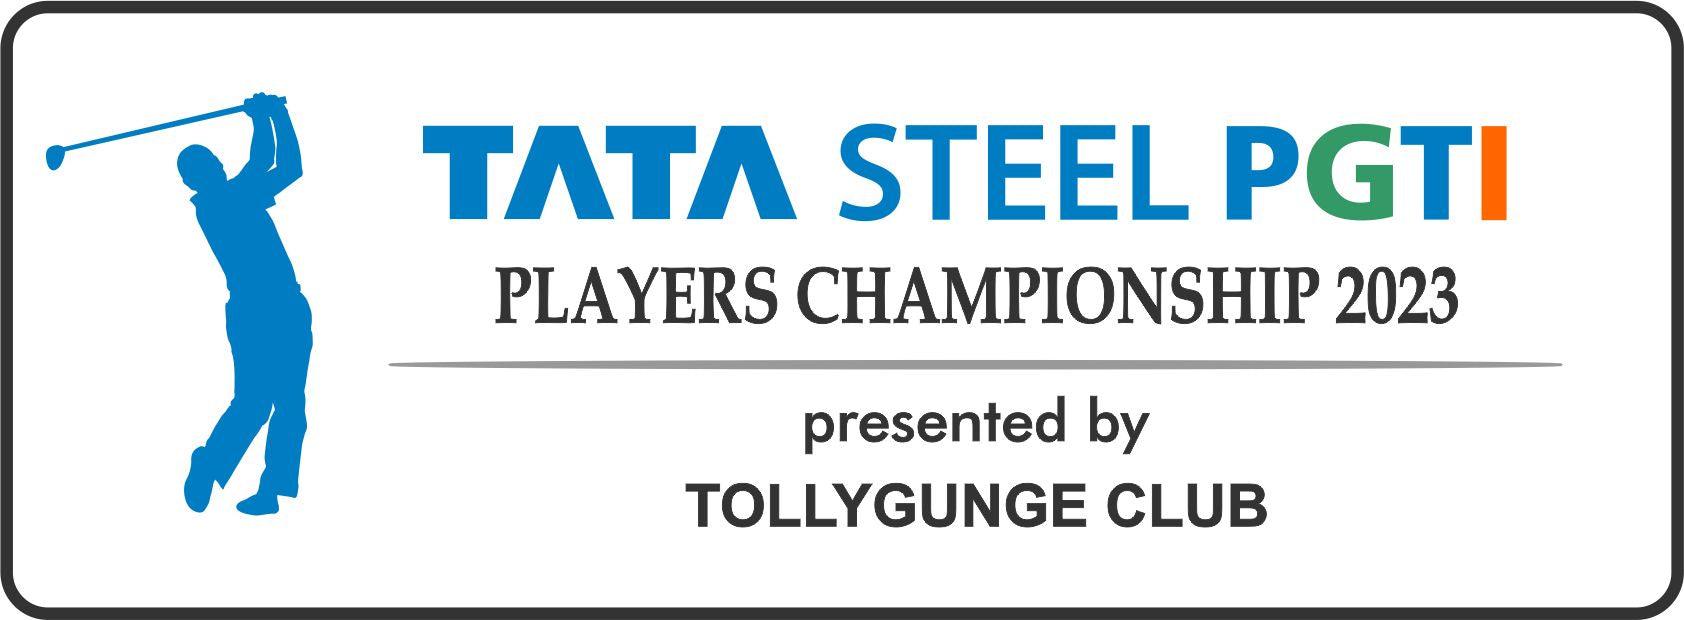 TATA Steel PGTI Players Championship presented by Tollygunge Club kick-starts 2023 PGTI season In India | golfedge  | India’s Favourite Online Golf Store  | golfedgeindia.com